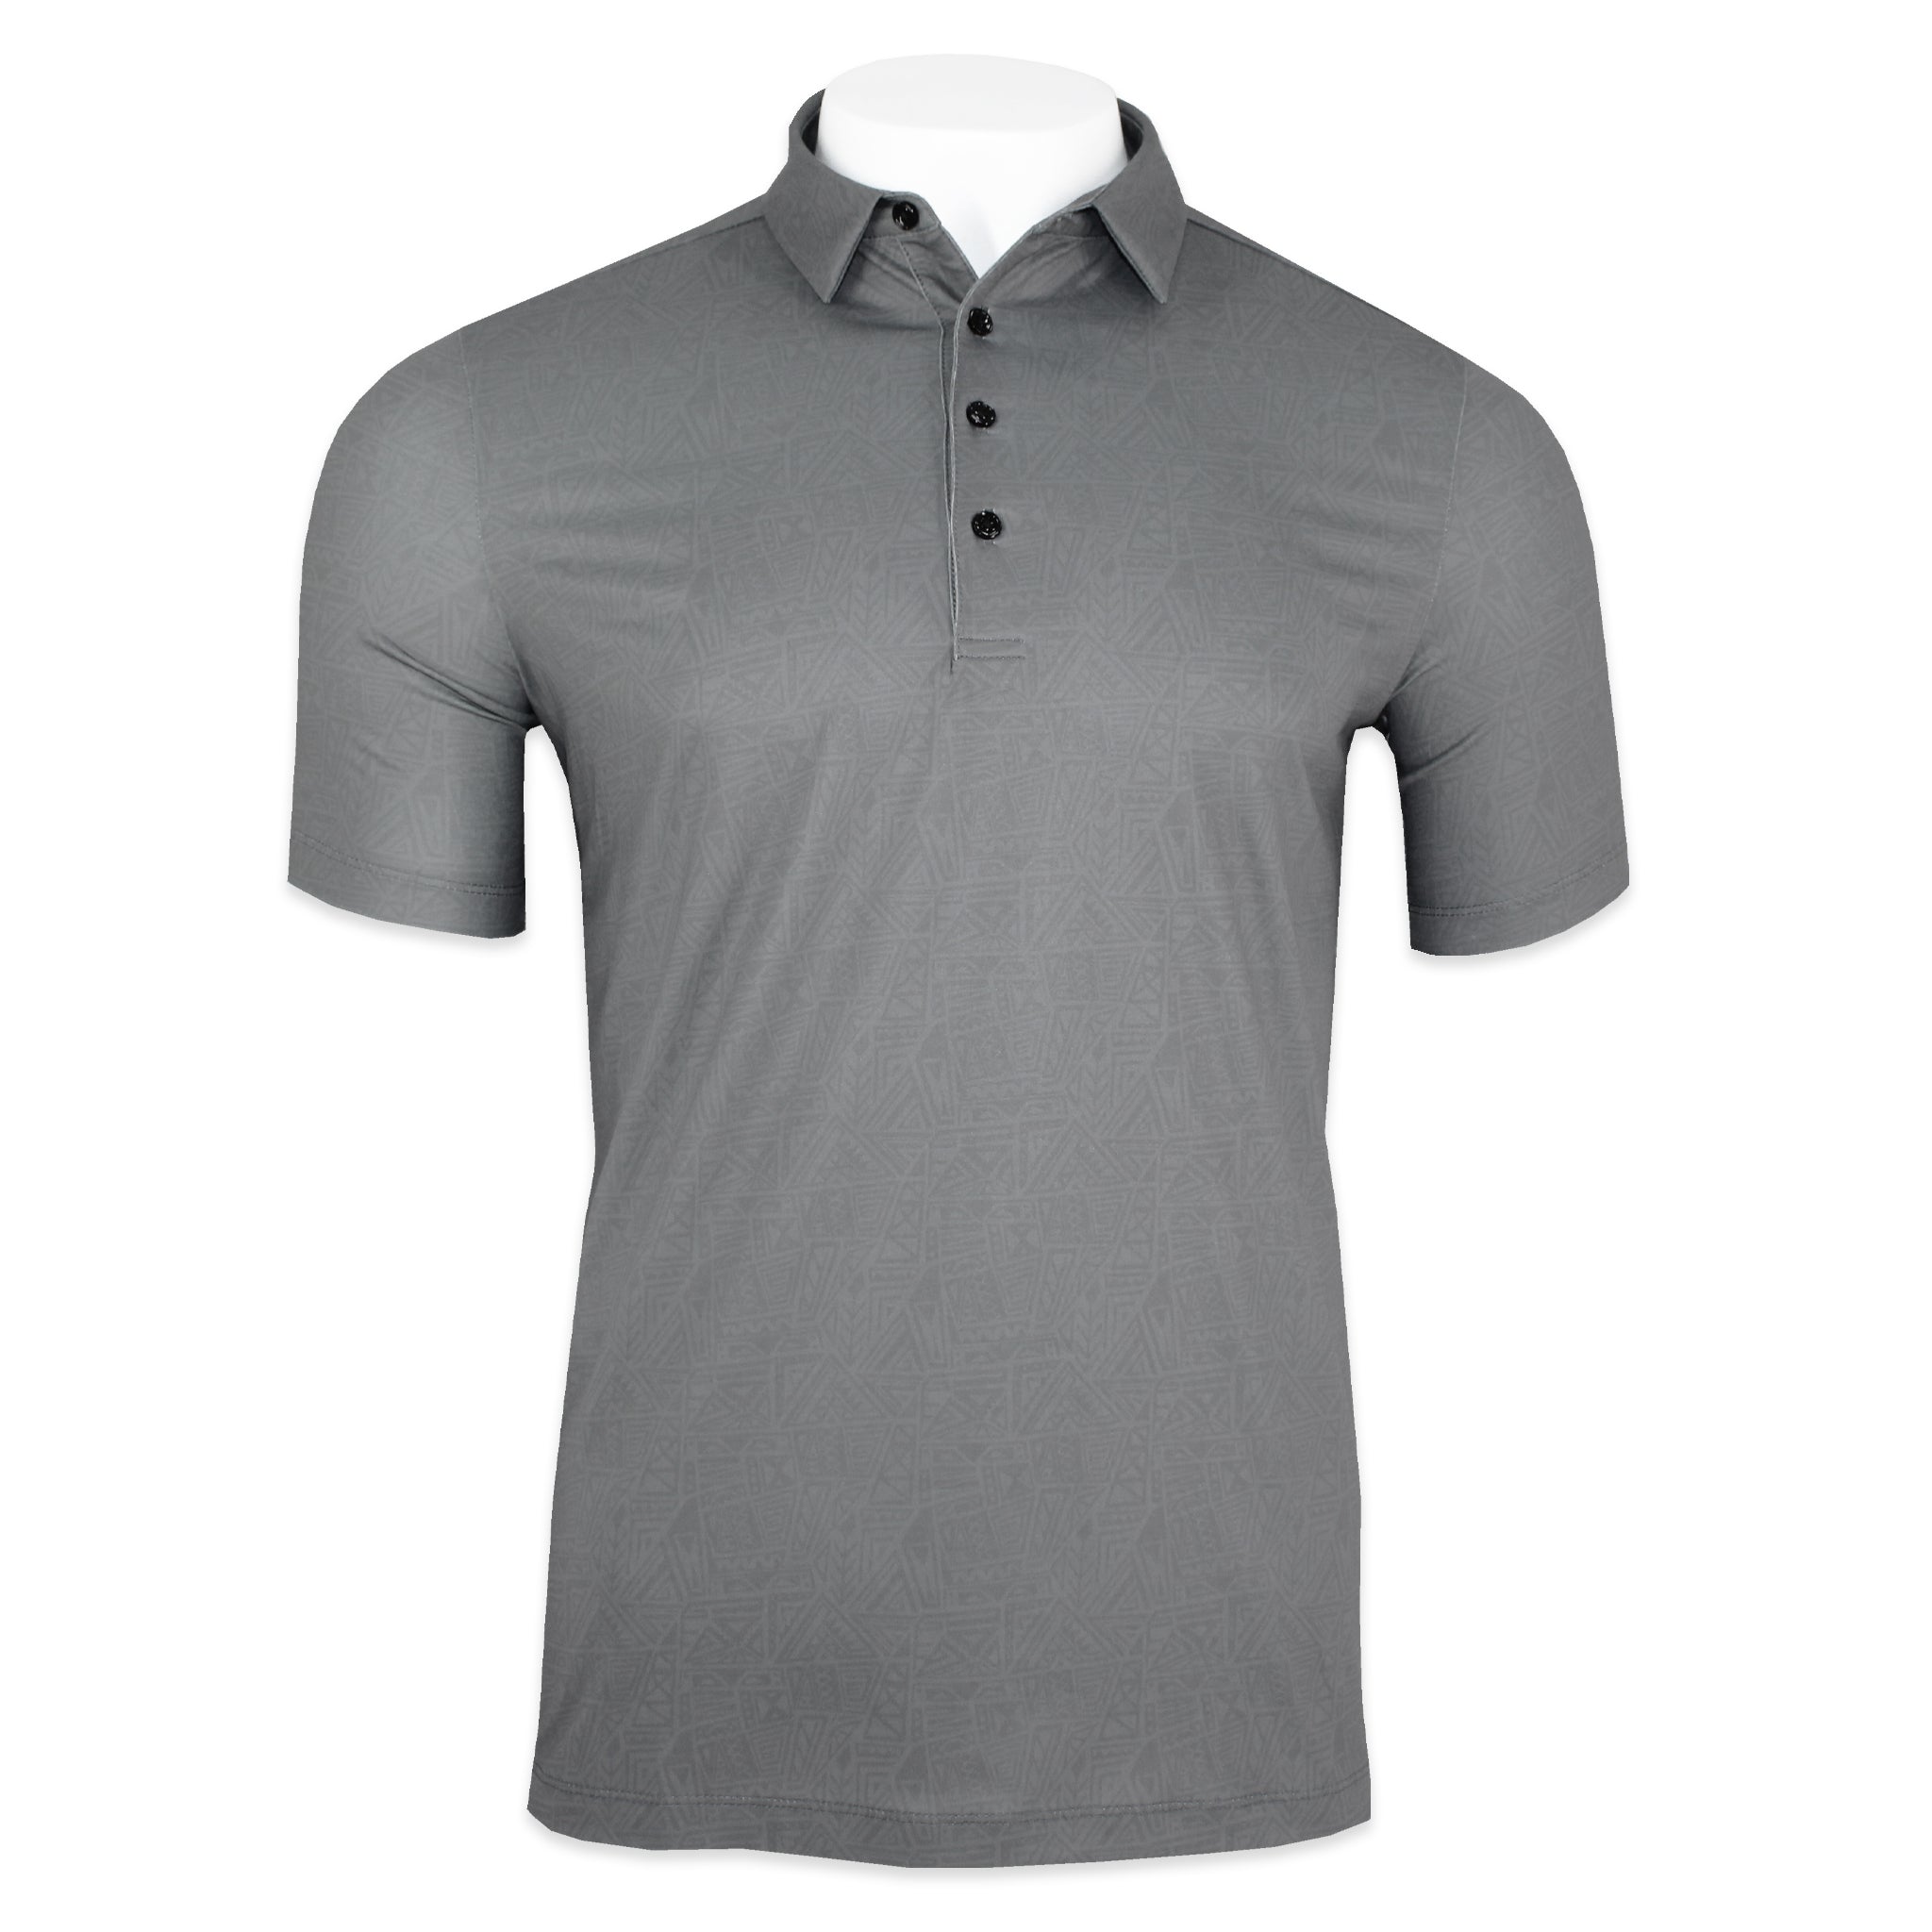 'Abstract' Four Button Golf Shirt